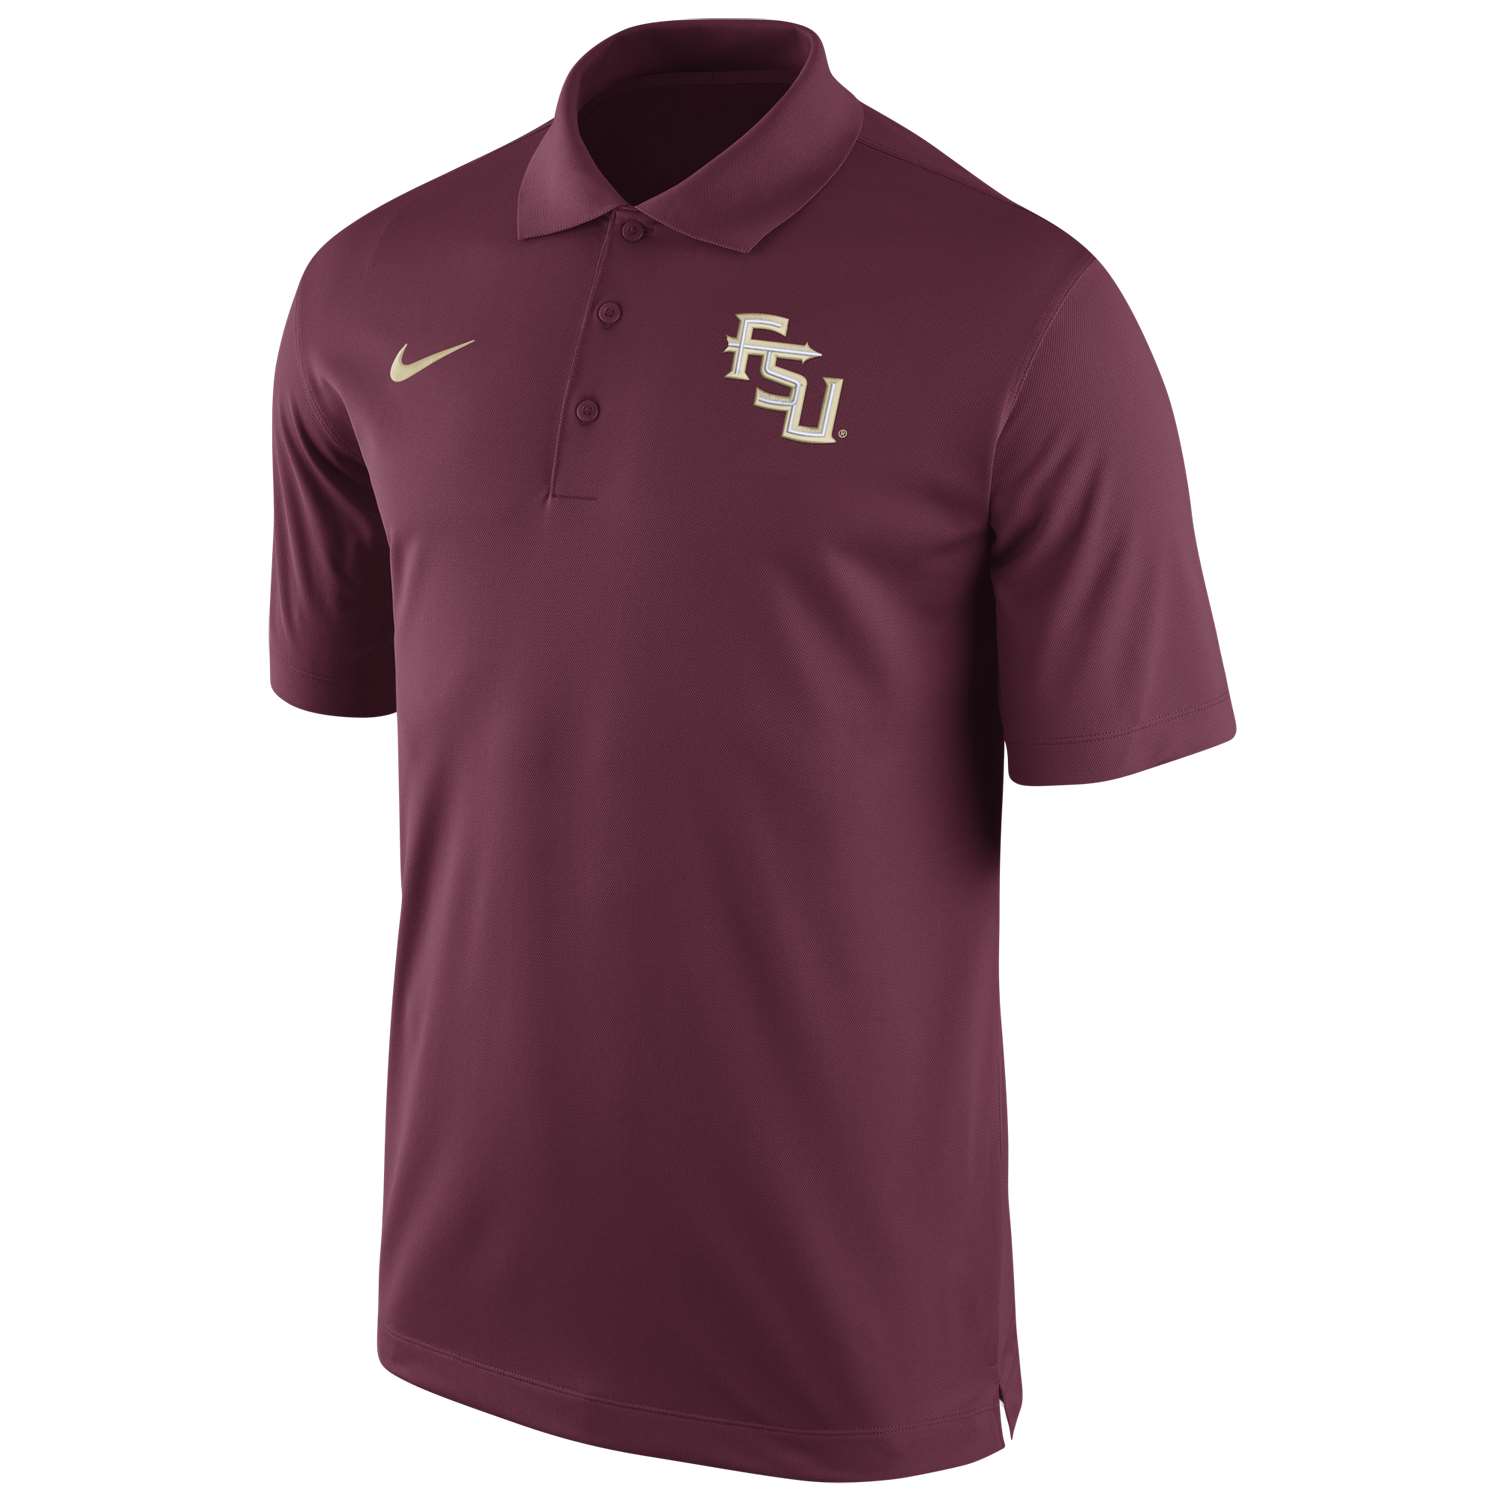 Nike Florida State Seminoles Dri-FIT Performance Polo Shirt